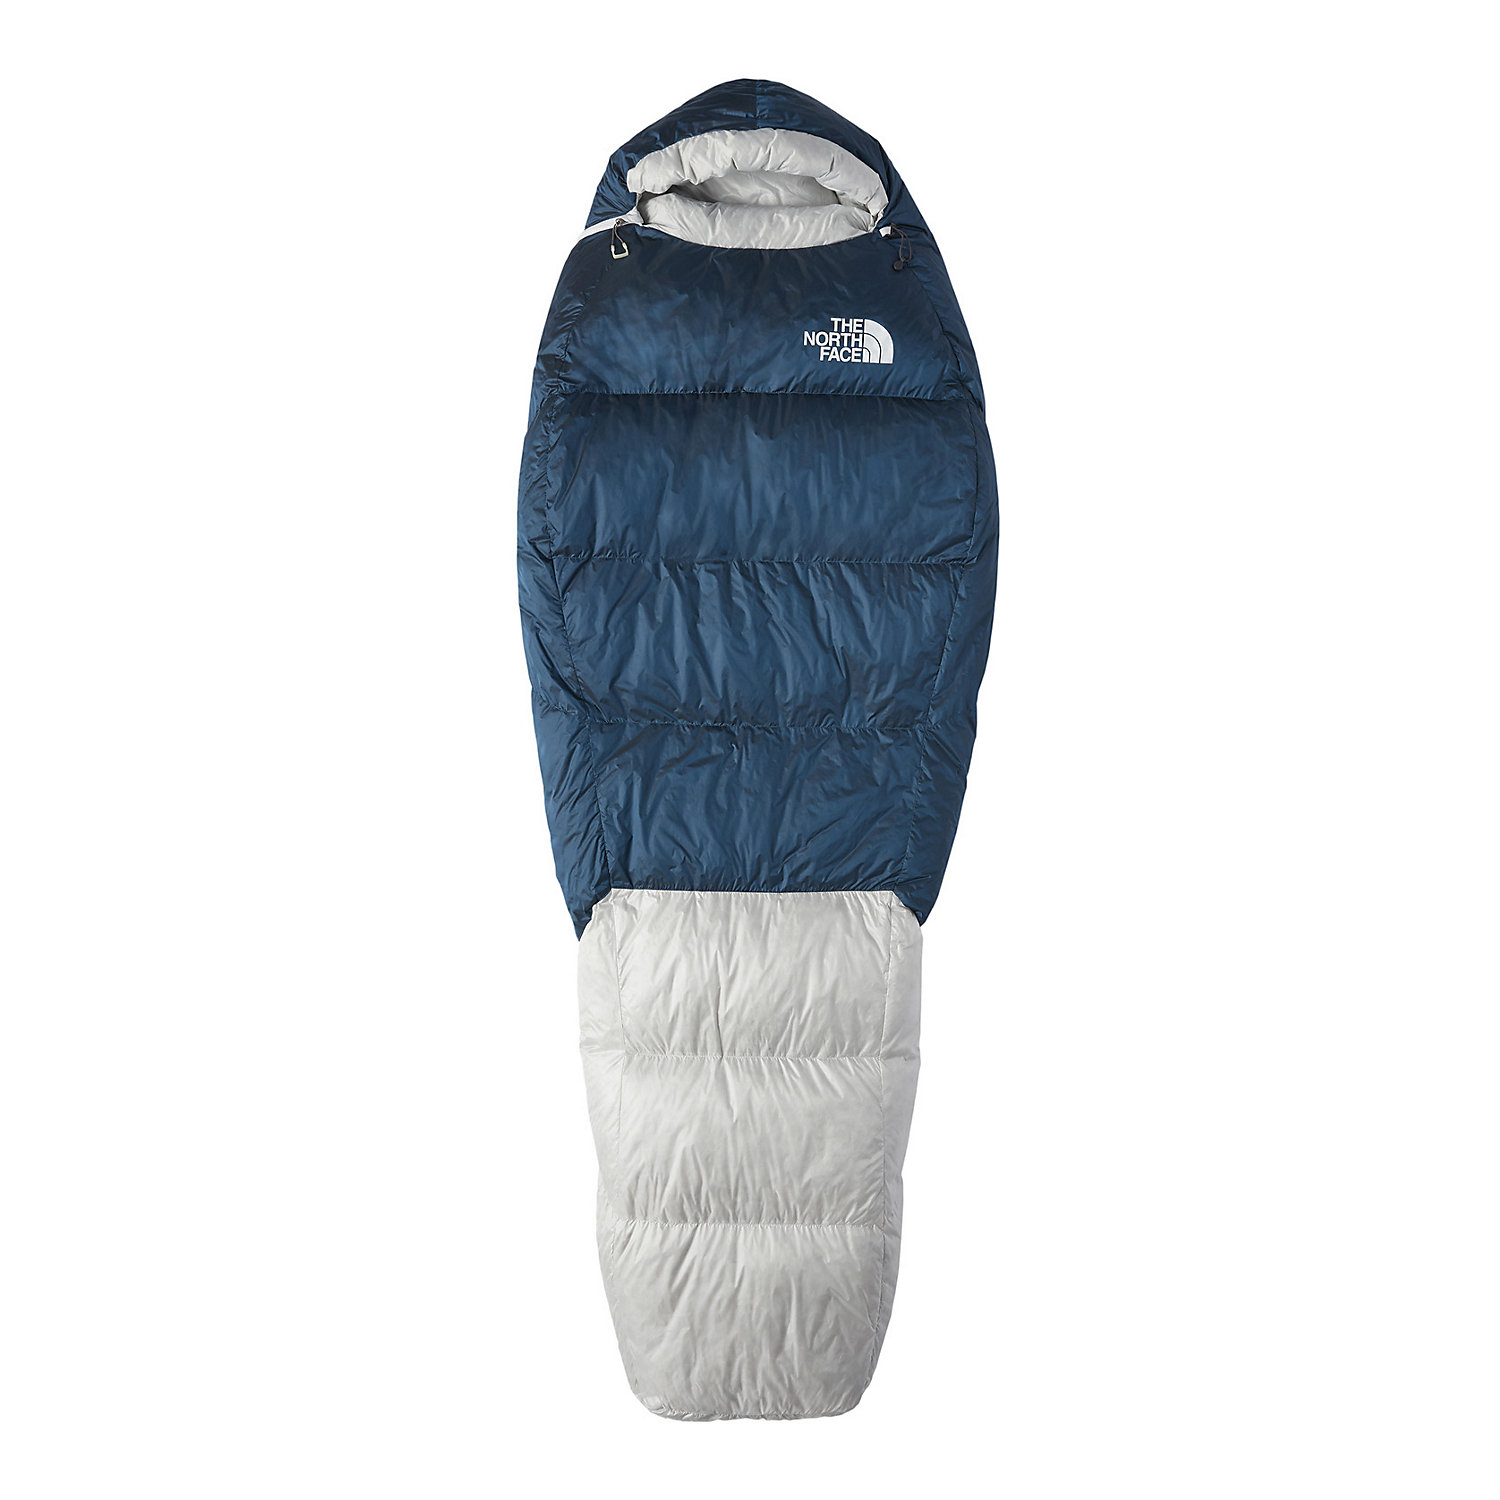 The North Face Blue Kazoo Eco Sleeping Bag